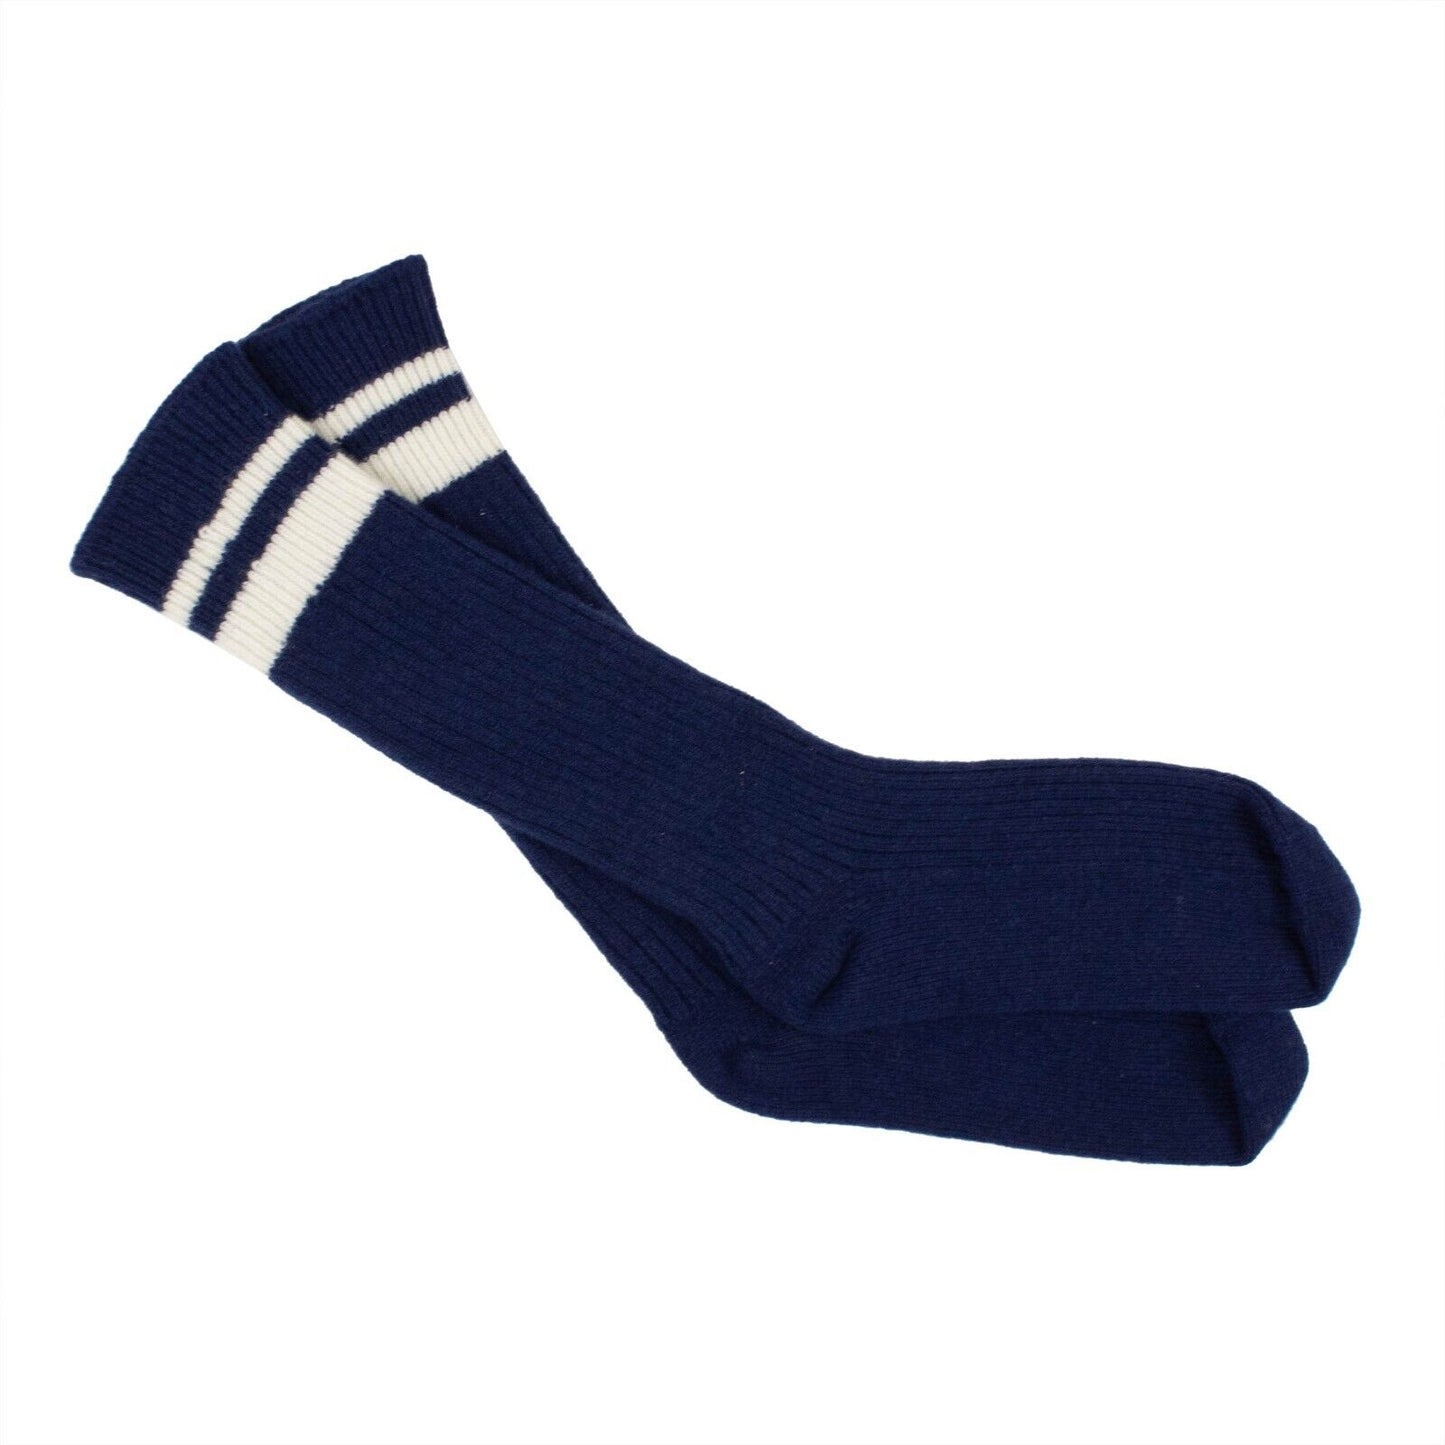 Unravel Project Socks